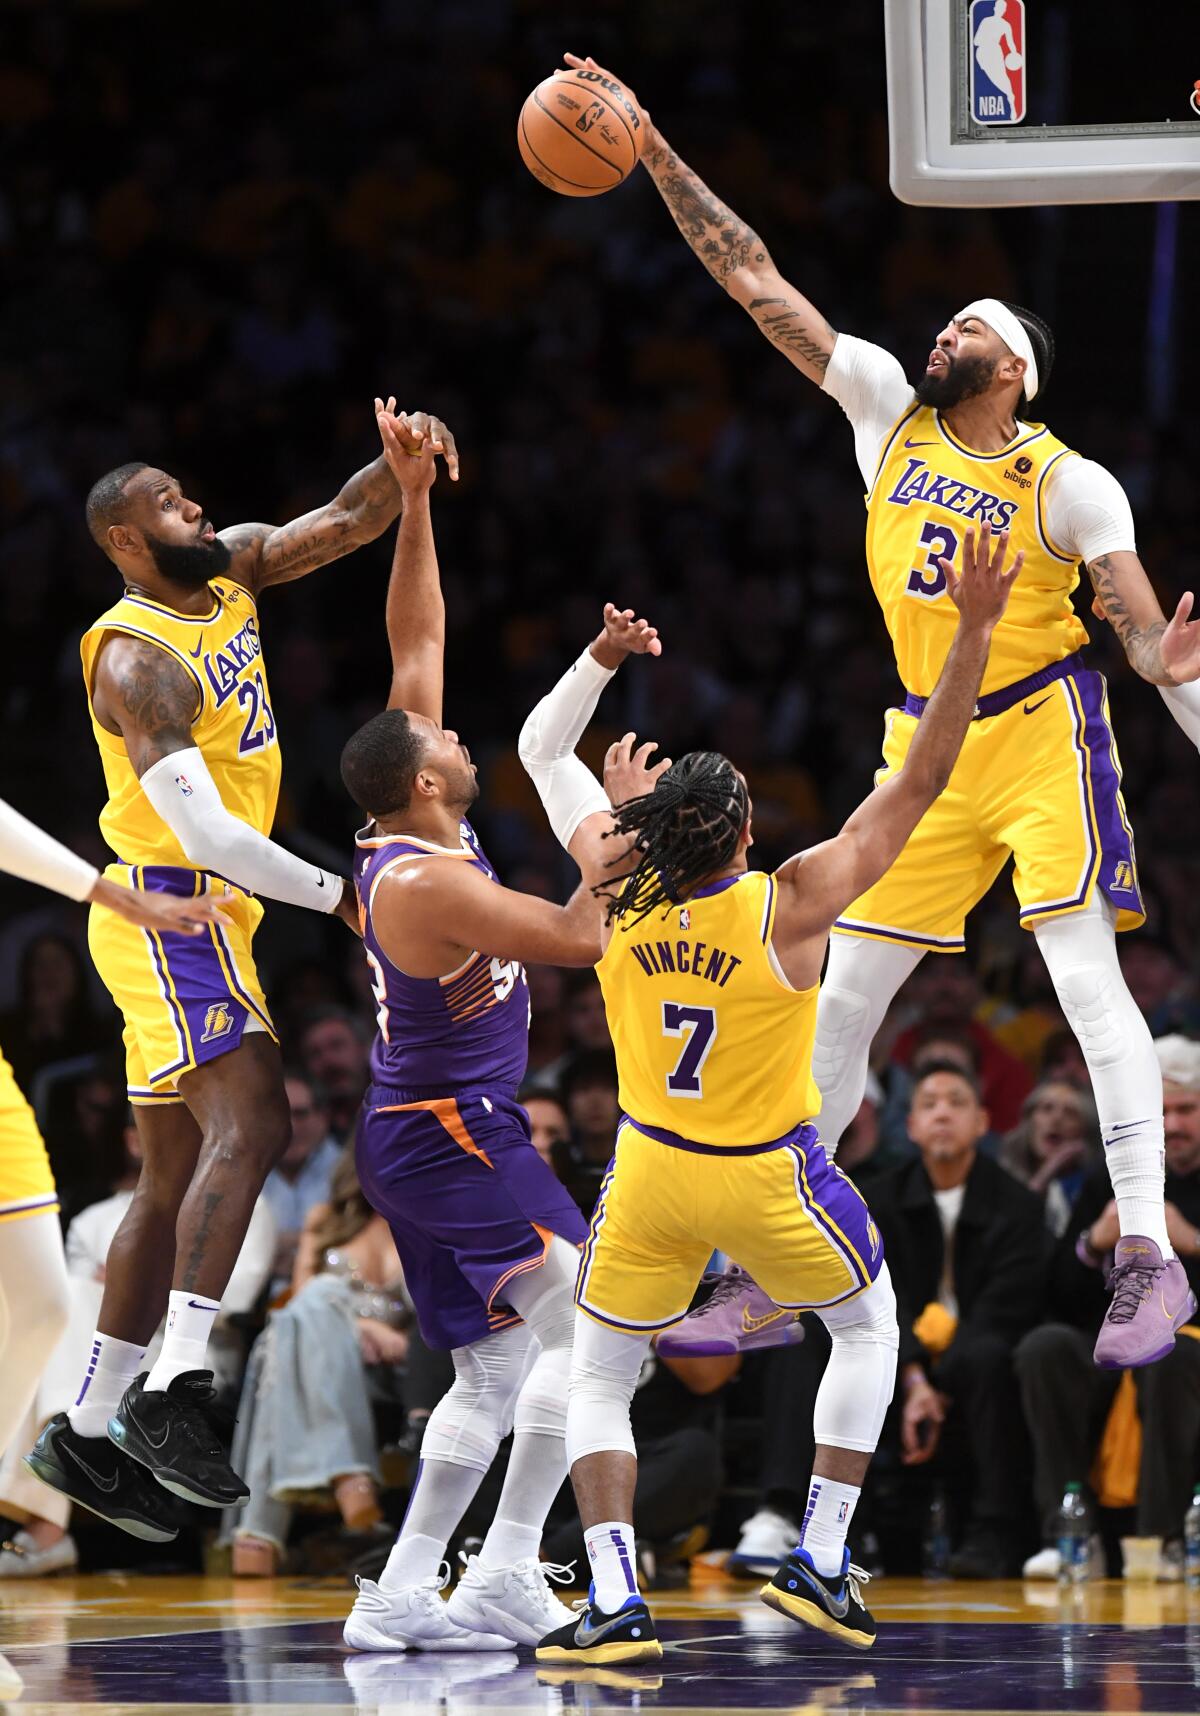 The Lakers' Anthony Davis blocks a shot by Eric Gordon.